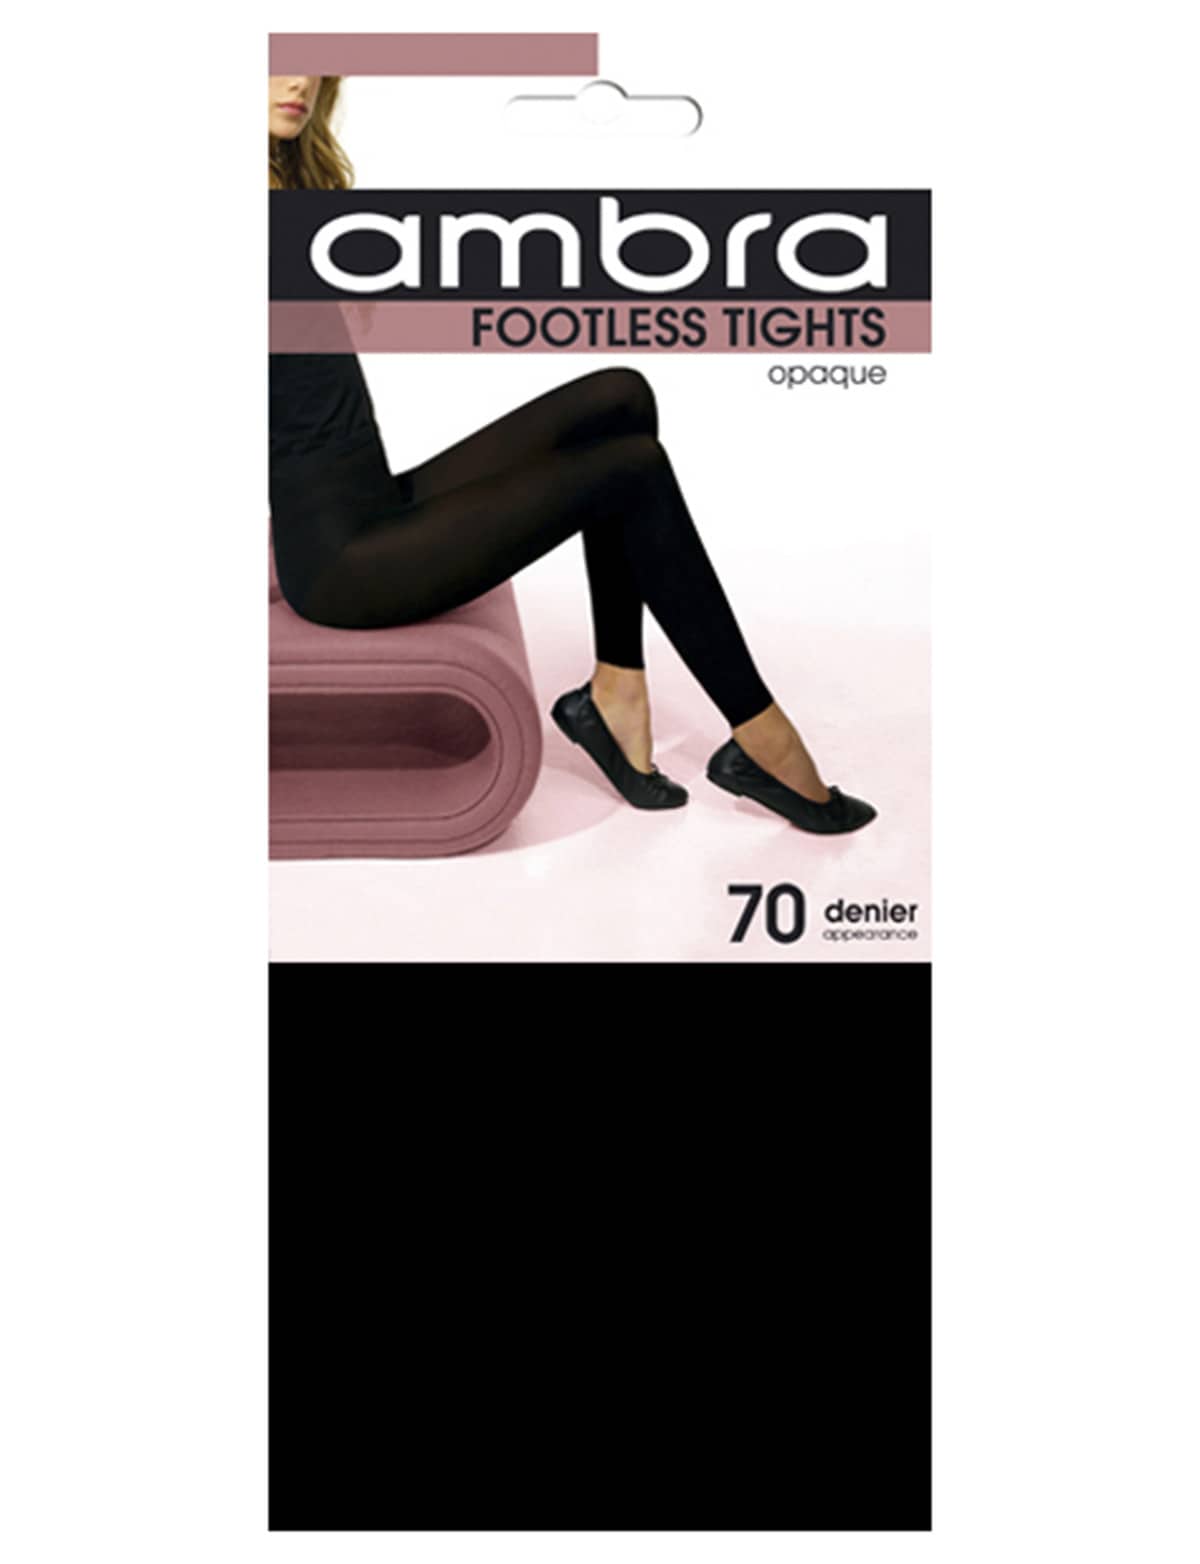 Ambra Footless Tights, 70 Denier - Hosiery